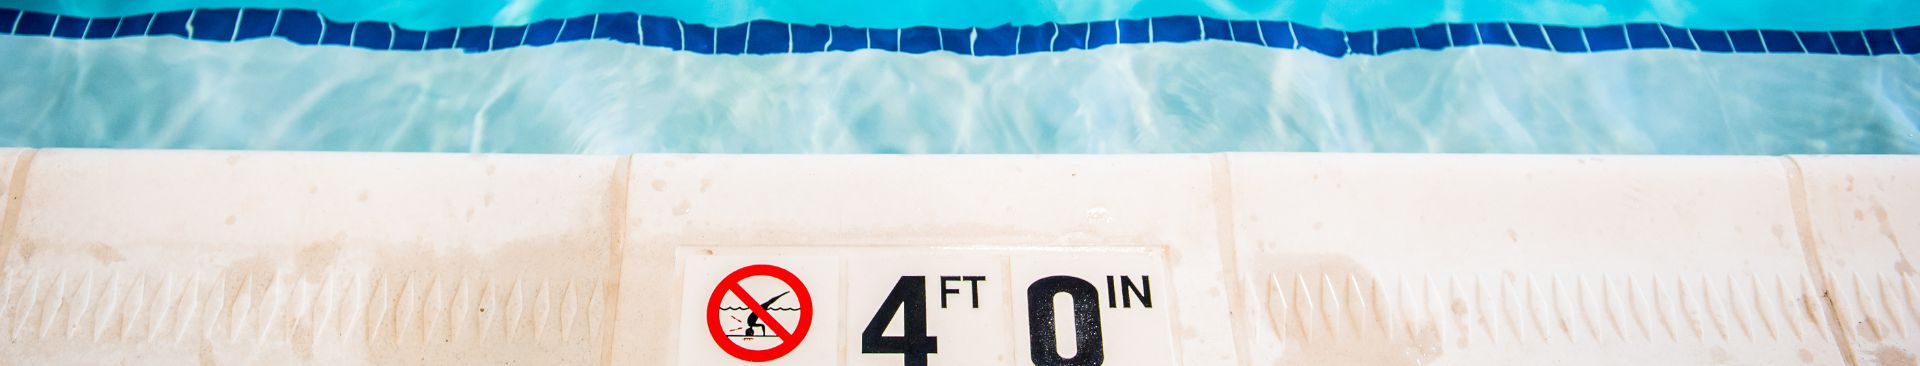 no diving pool sign